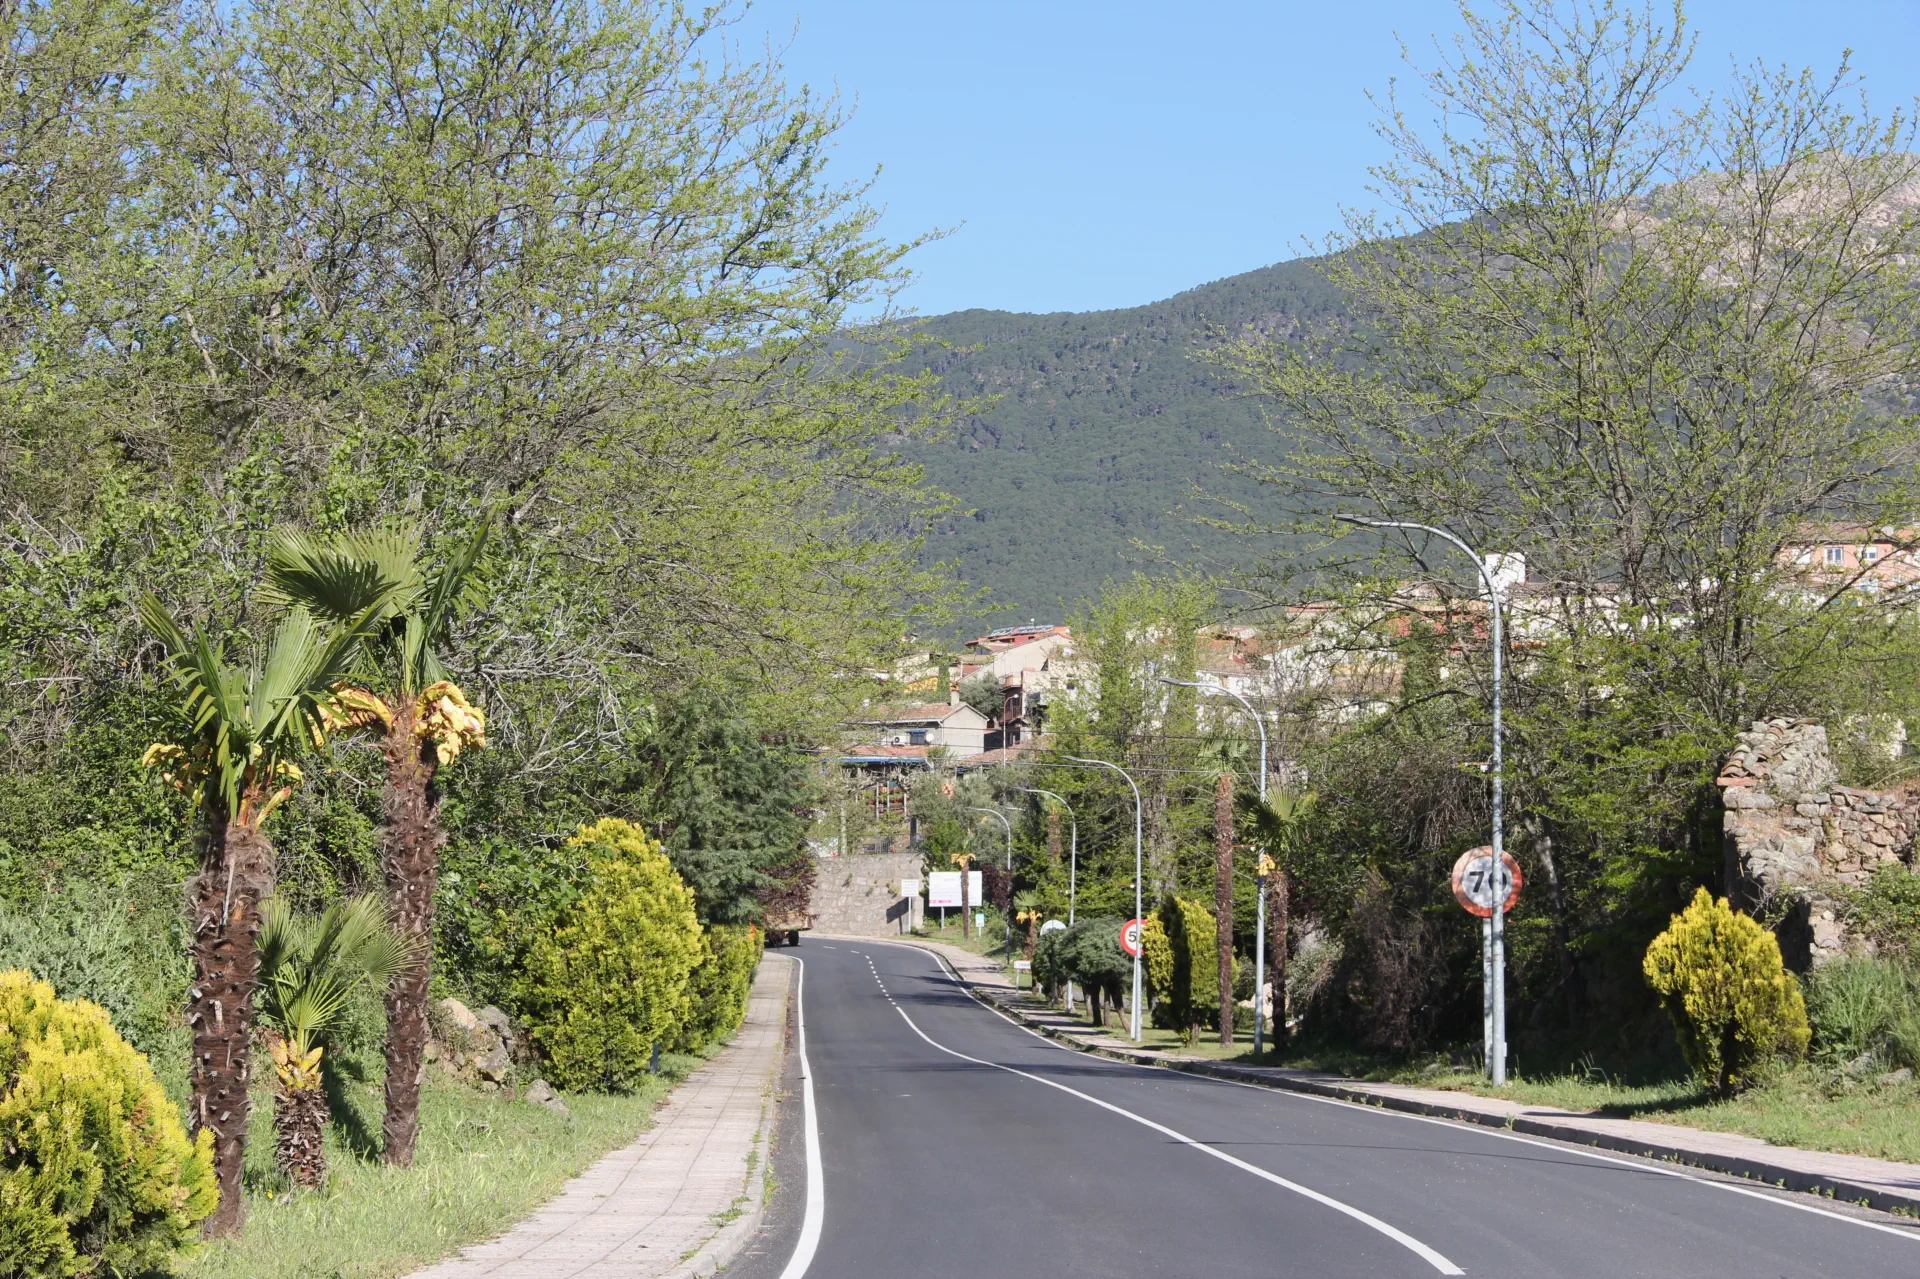 Casavieja, Ávila, Valle del Tiétar sur de Gredos